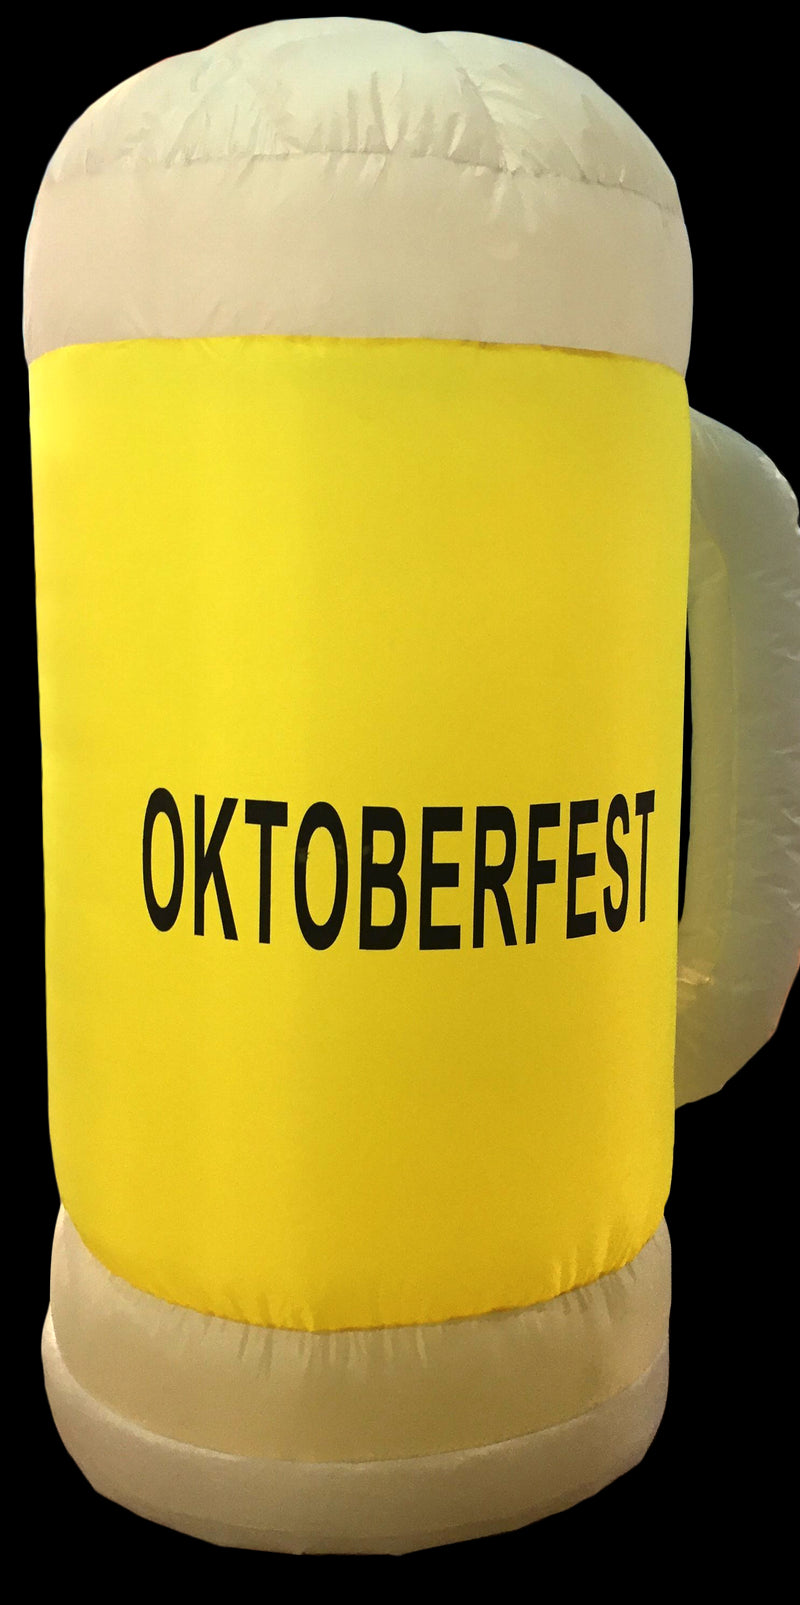 Oktoberfest Party Large Inflatable Beer Stein - 1 - OktoberfestHaus.com